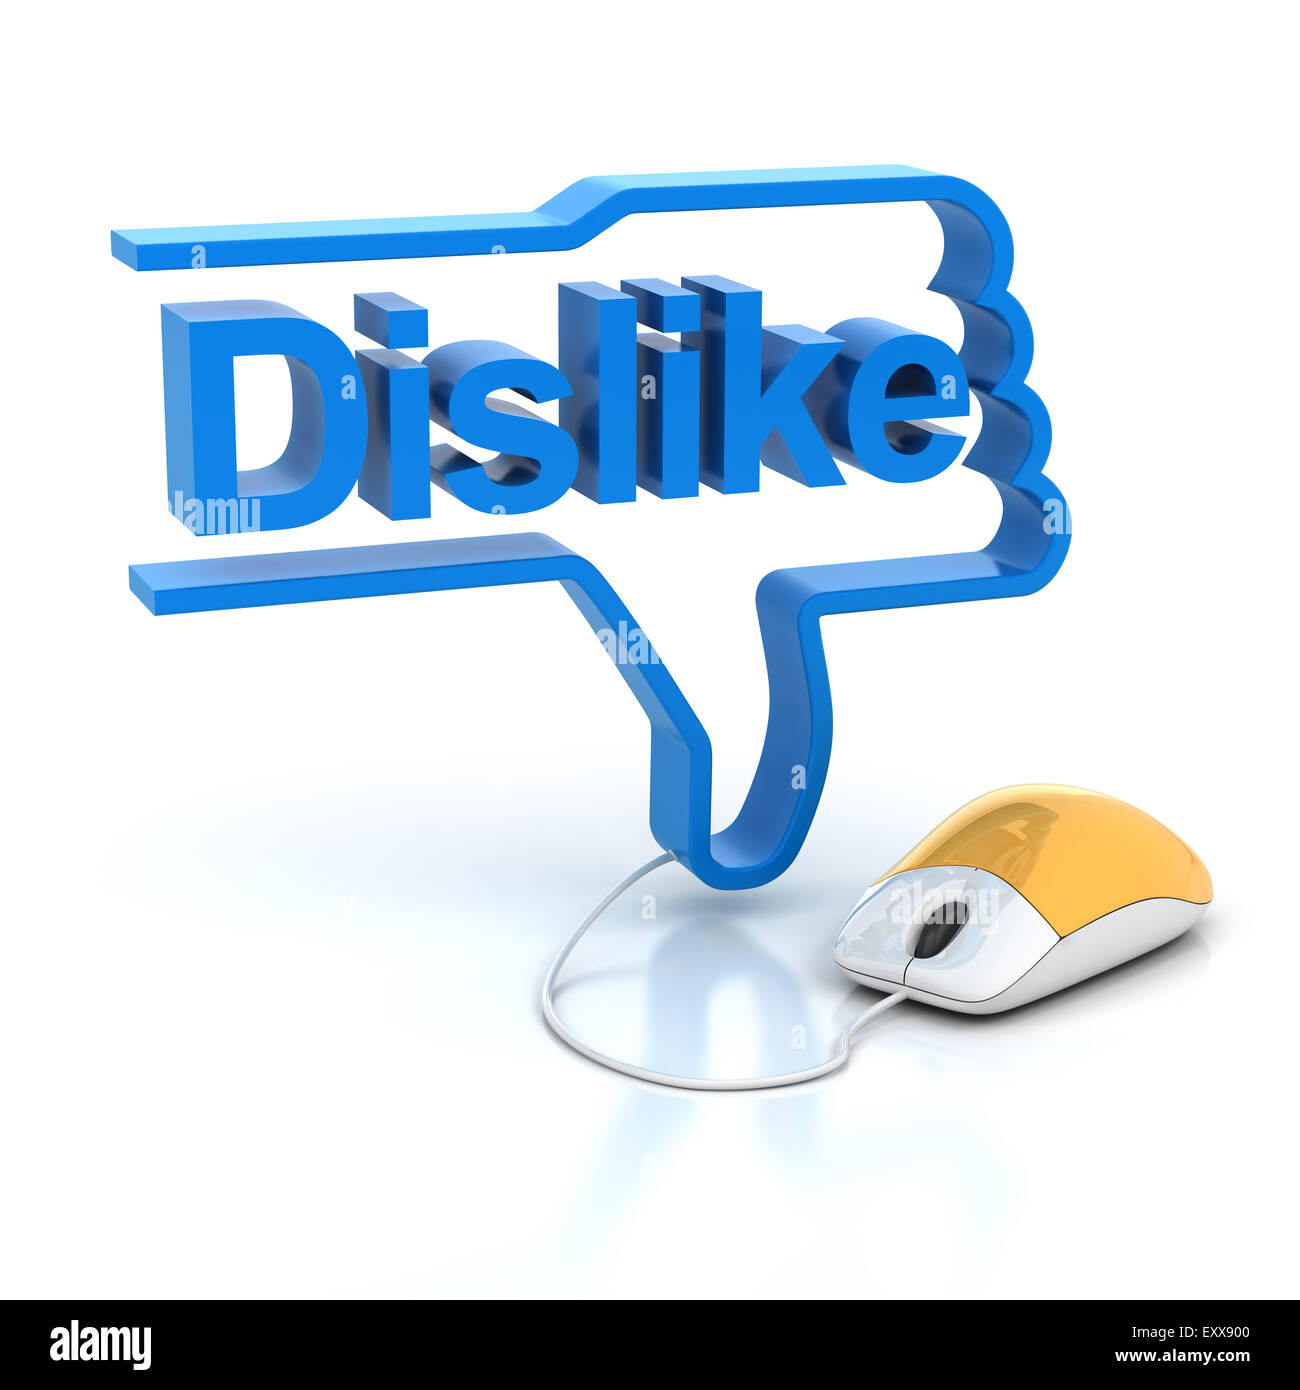 Dislike symbol Stock Photo